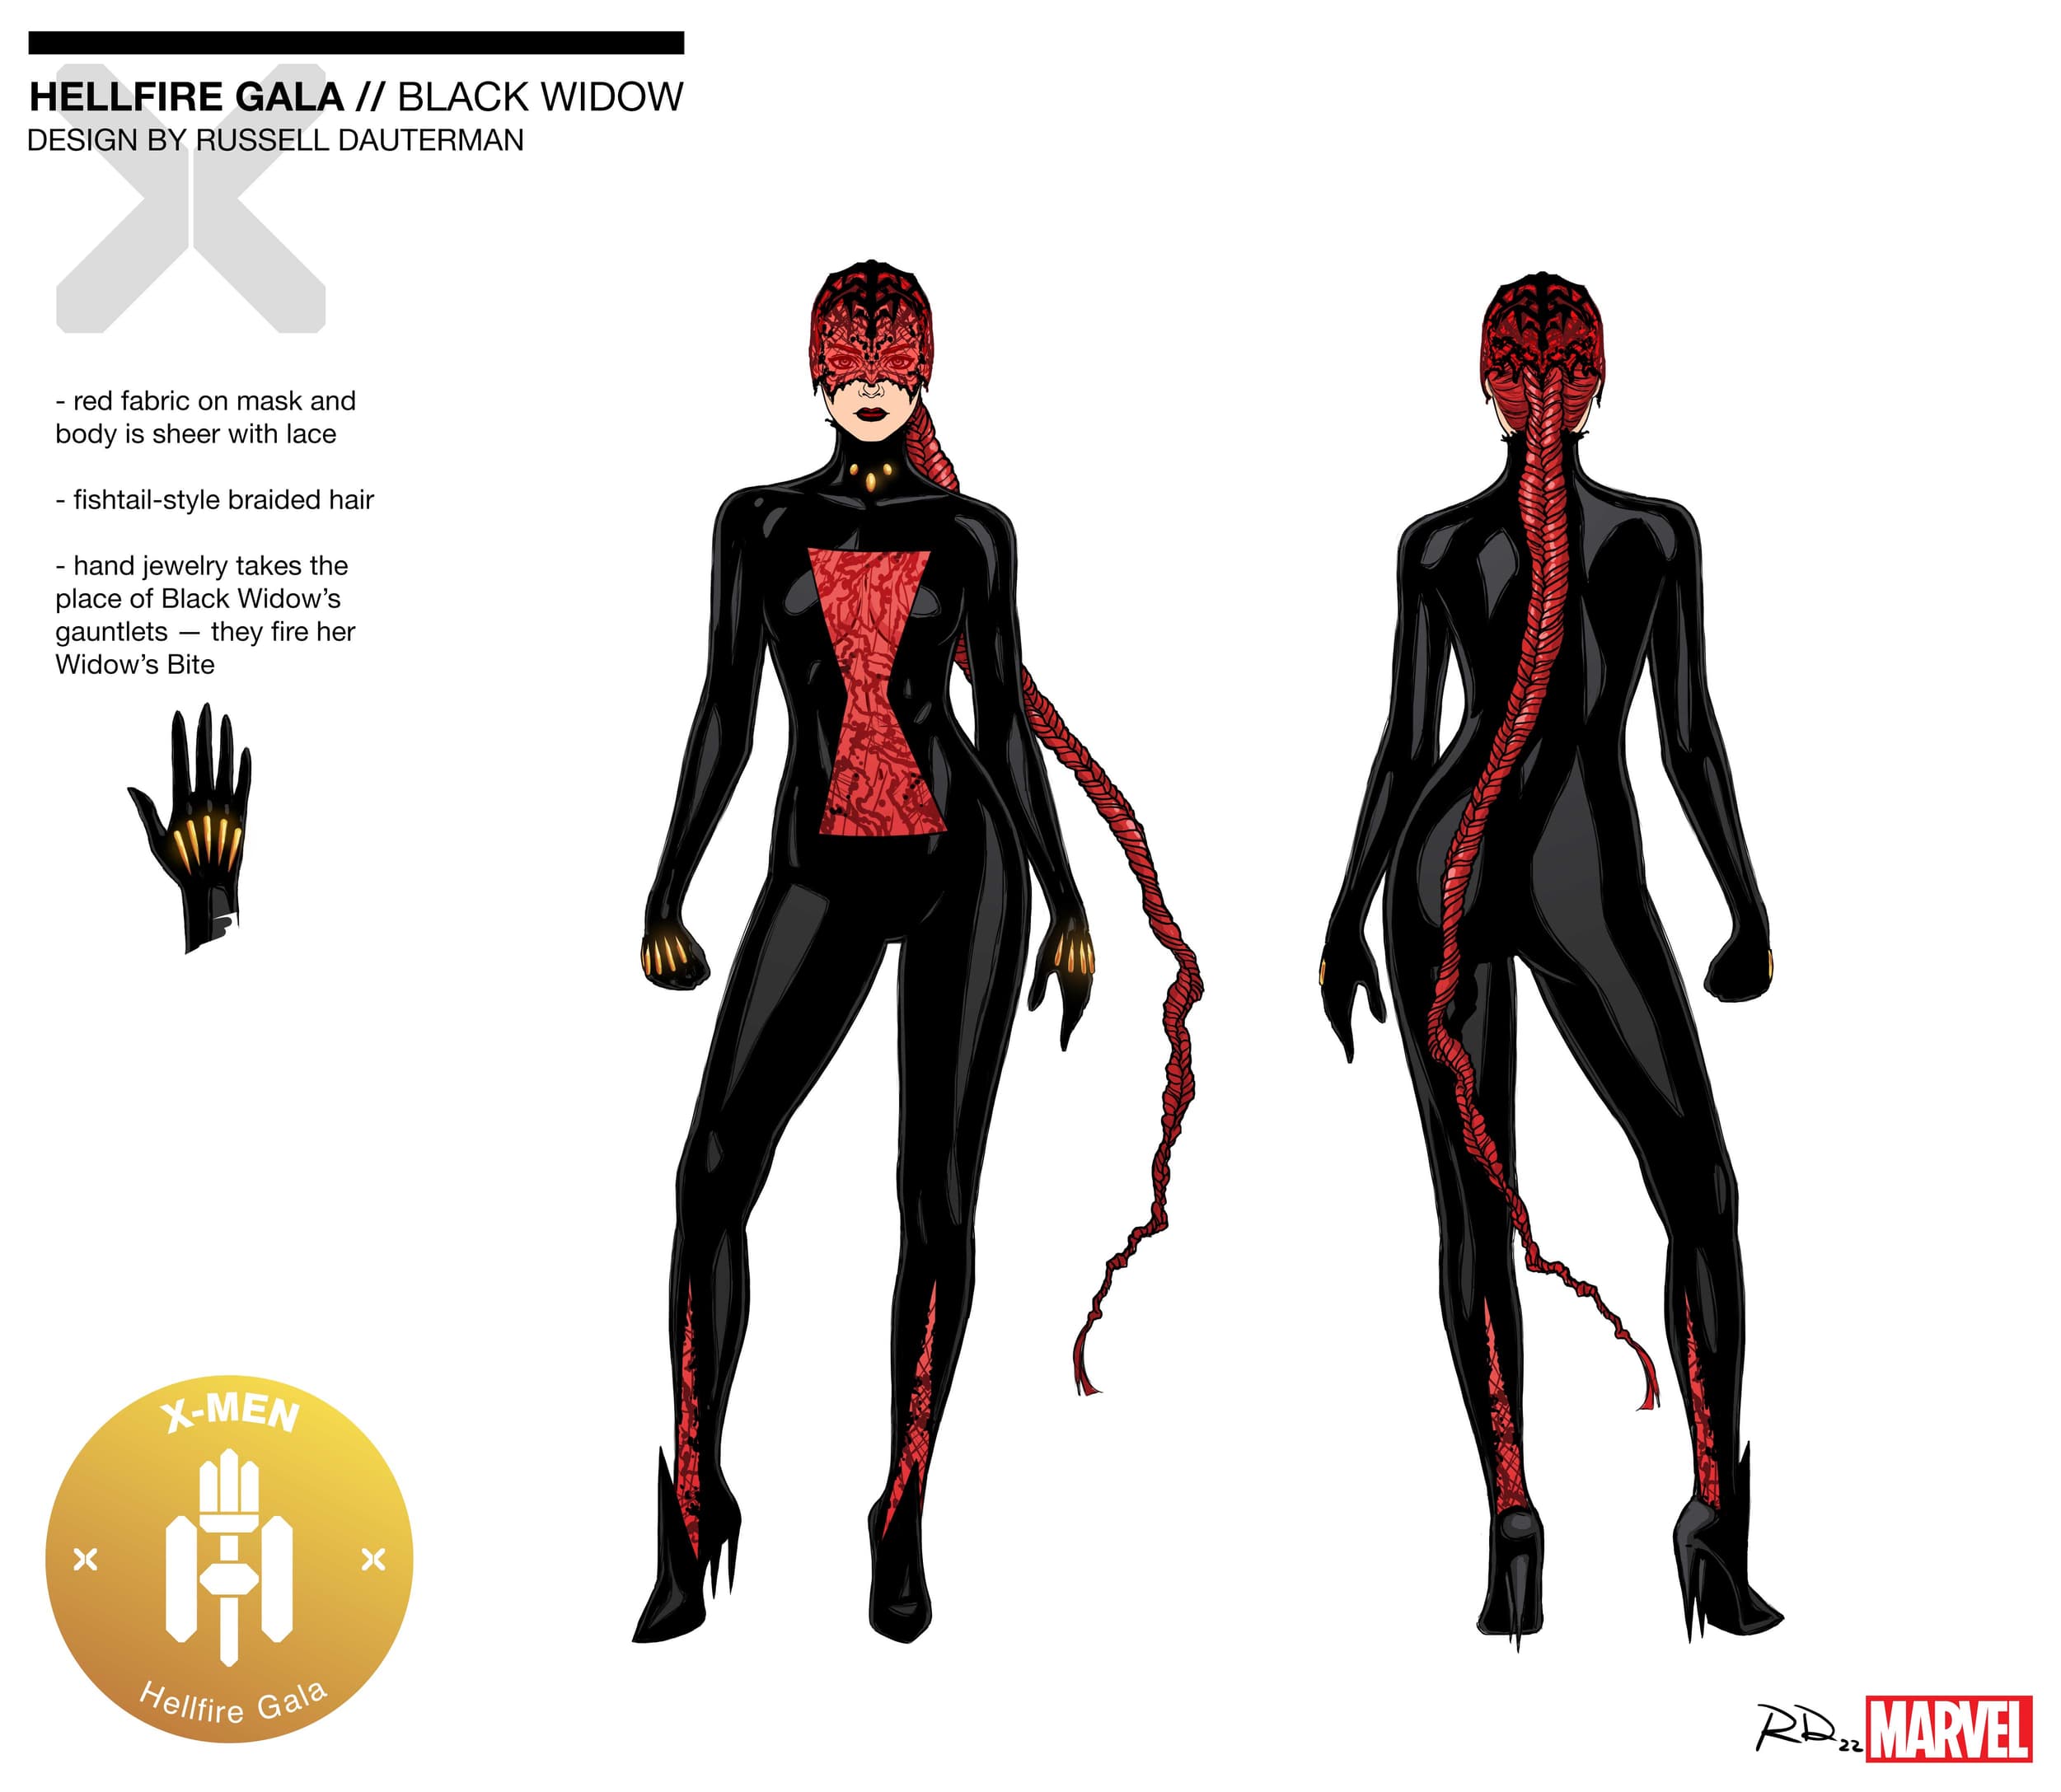 Black Widow Hellfire Gala 2022 Design by Russell Dauterman